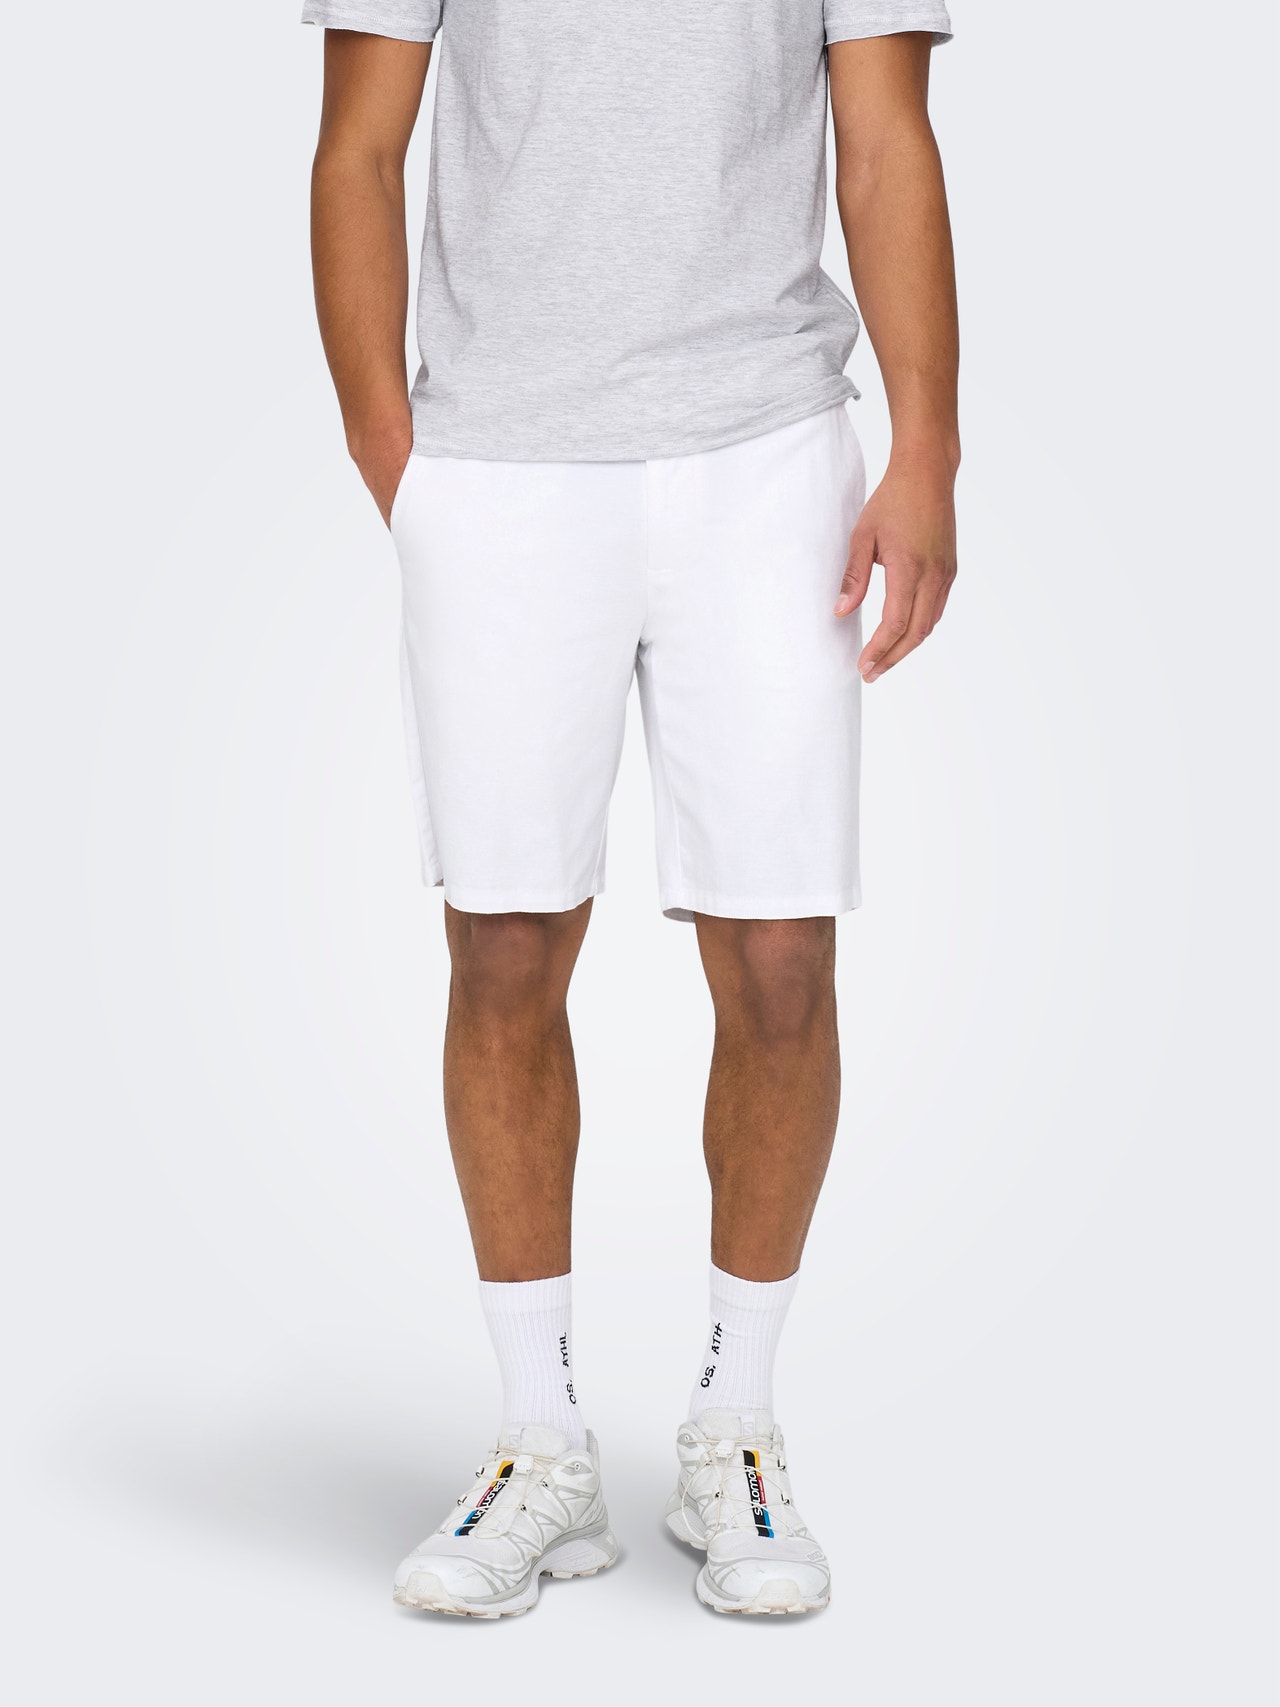 ONLY & SONS Regular Fit Linen Shorts -White - 22024940